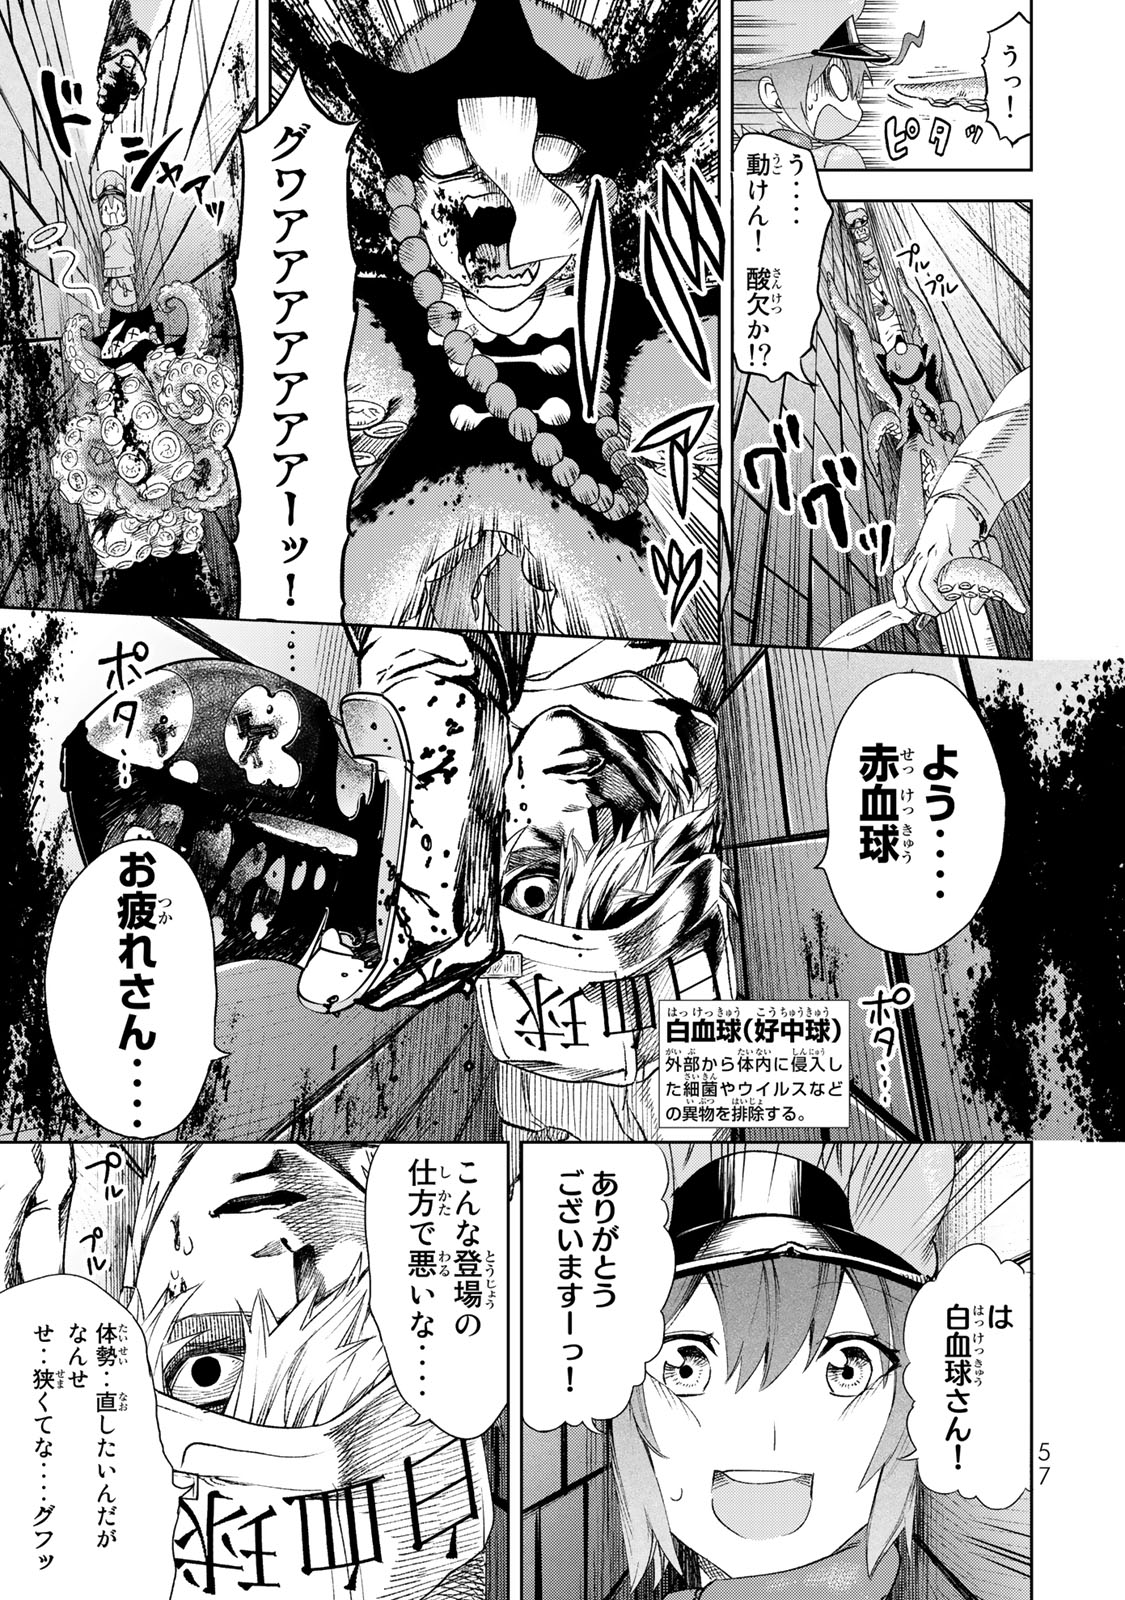 Hataraku Saibou - Chapter 28 - Page 3